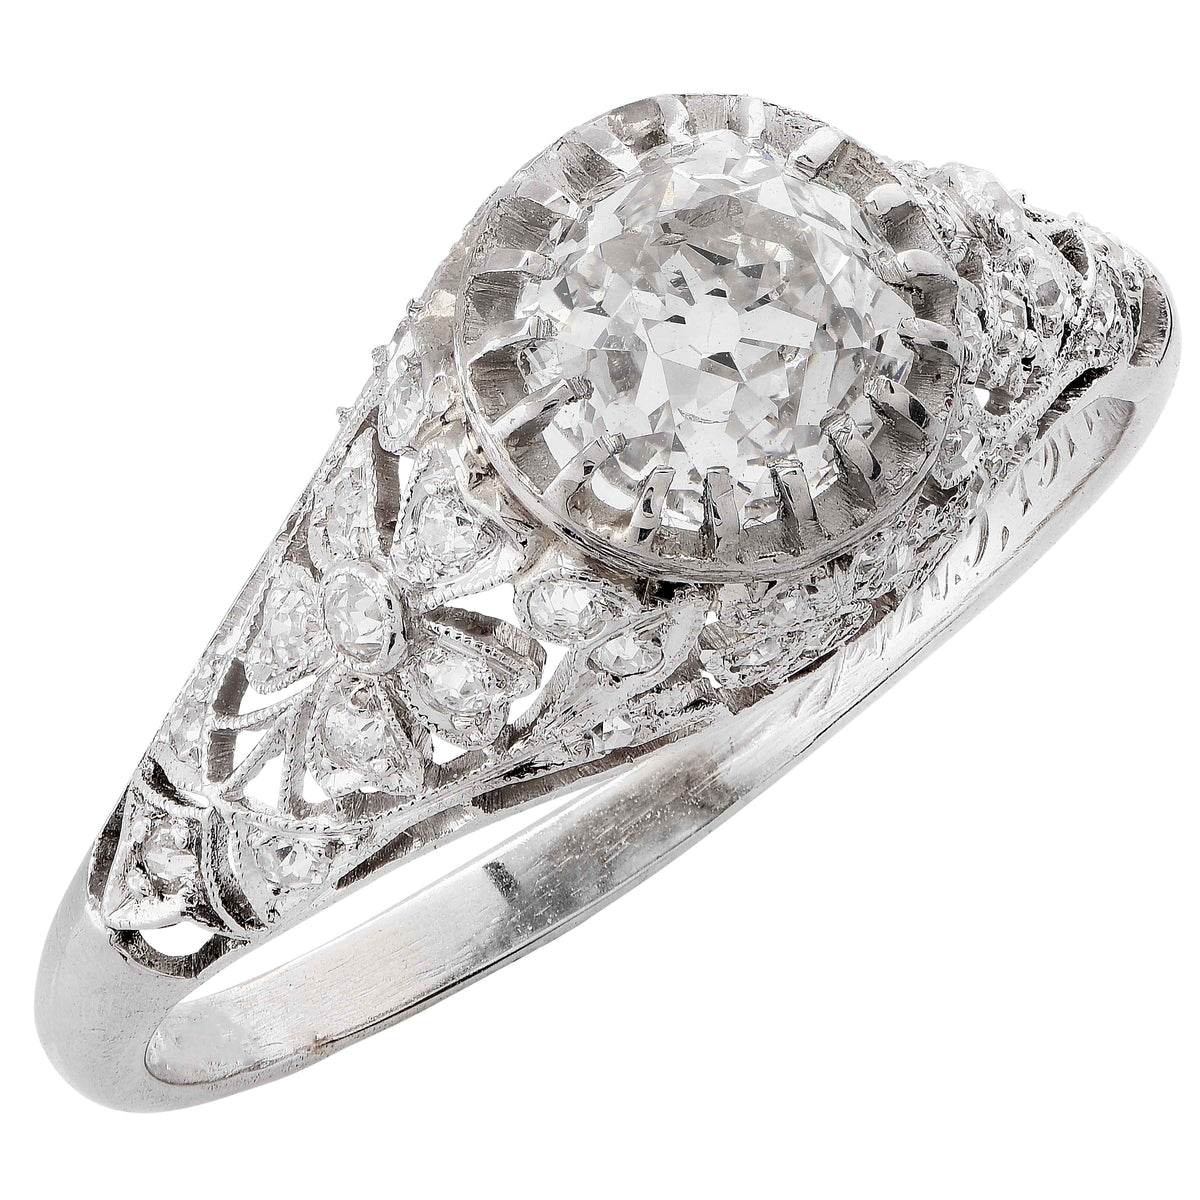 Edwardian 1.31 Carat GIA Certified Old Mine Cut Diamond Platinum Engagement Ring